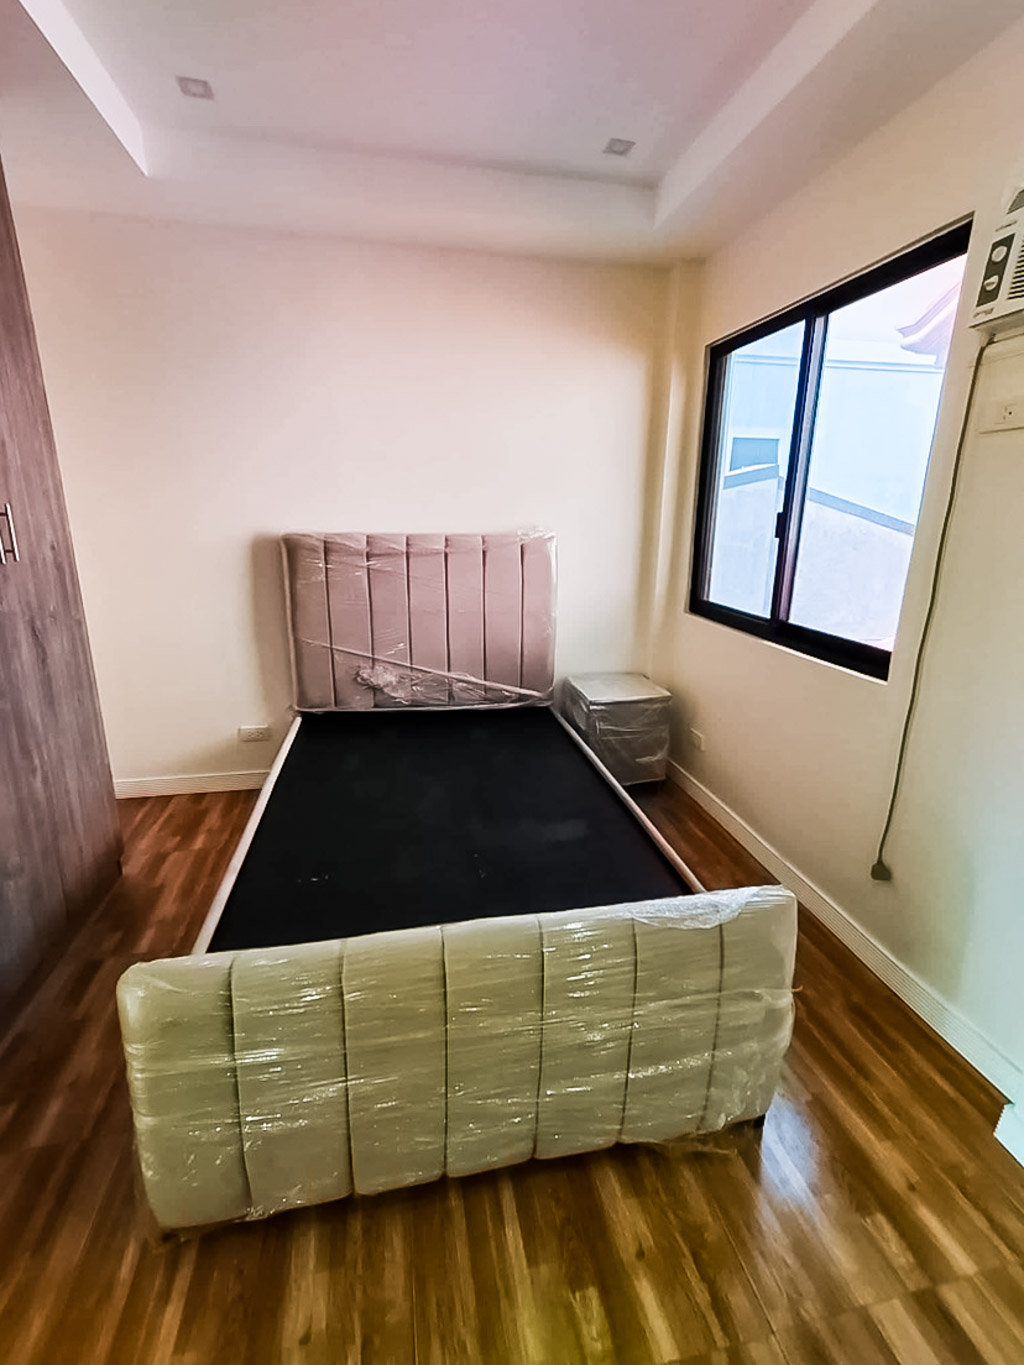 SRBPGV1 4 Bedroom House for Sale in Mactan - 10